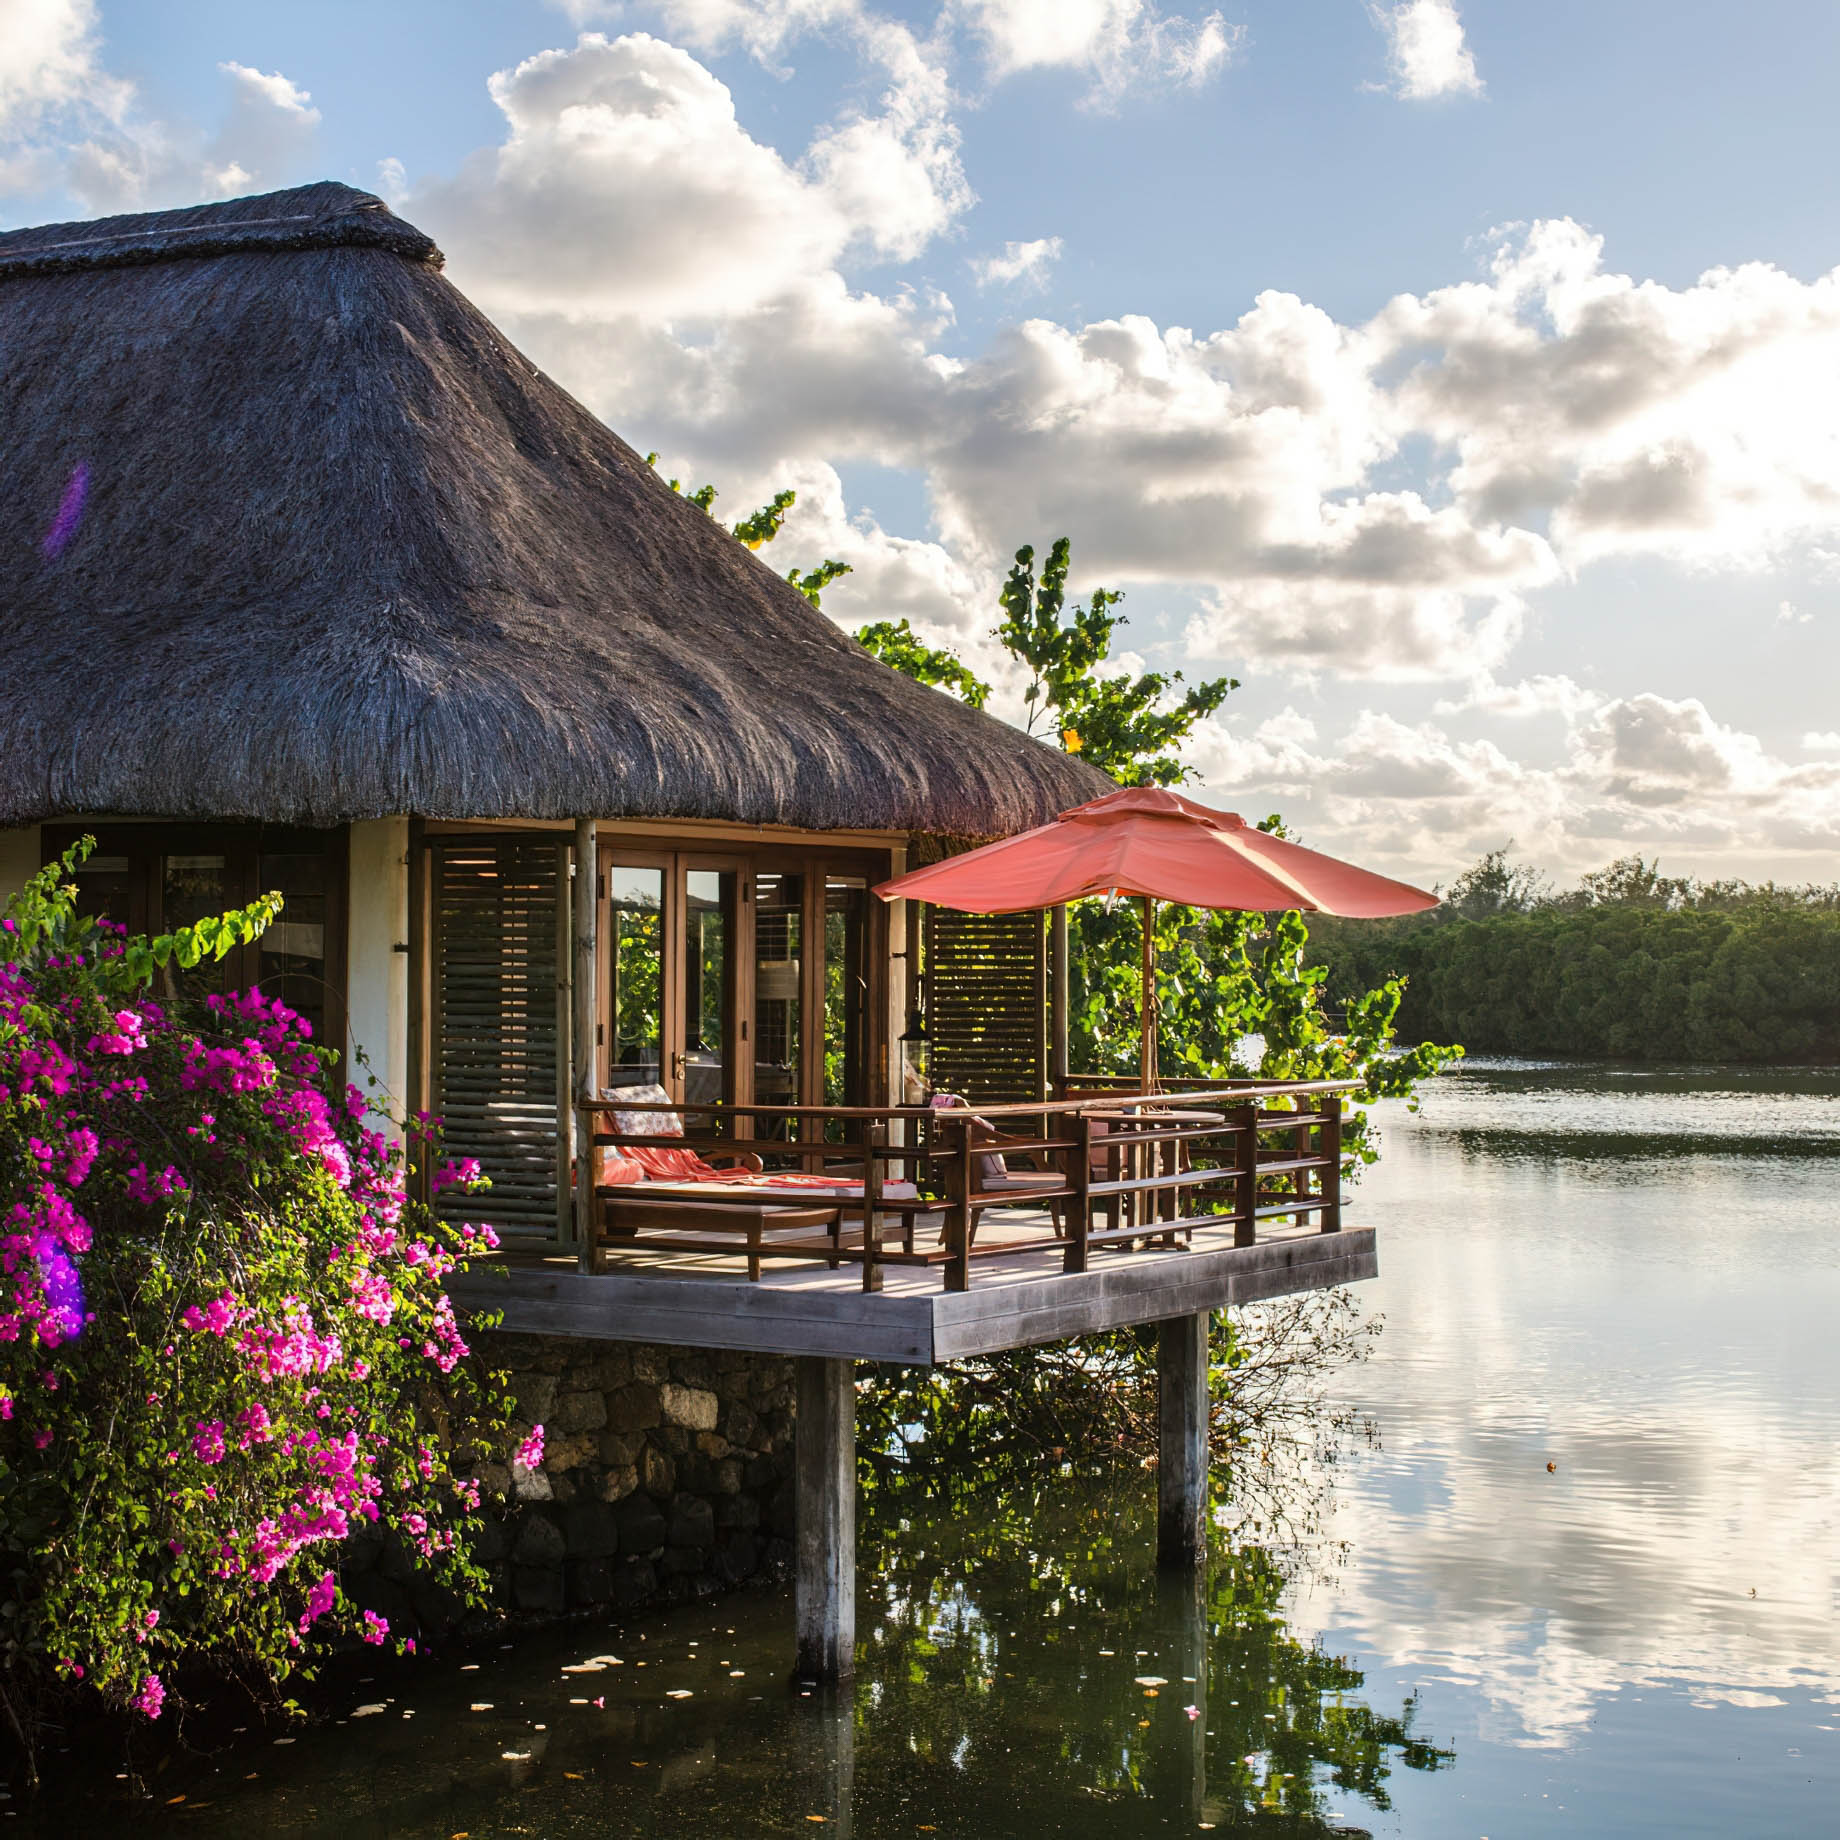 Constance Prince Maurice Resort - Mauritius - Villa on Stilts